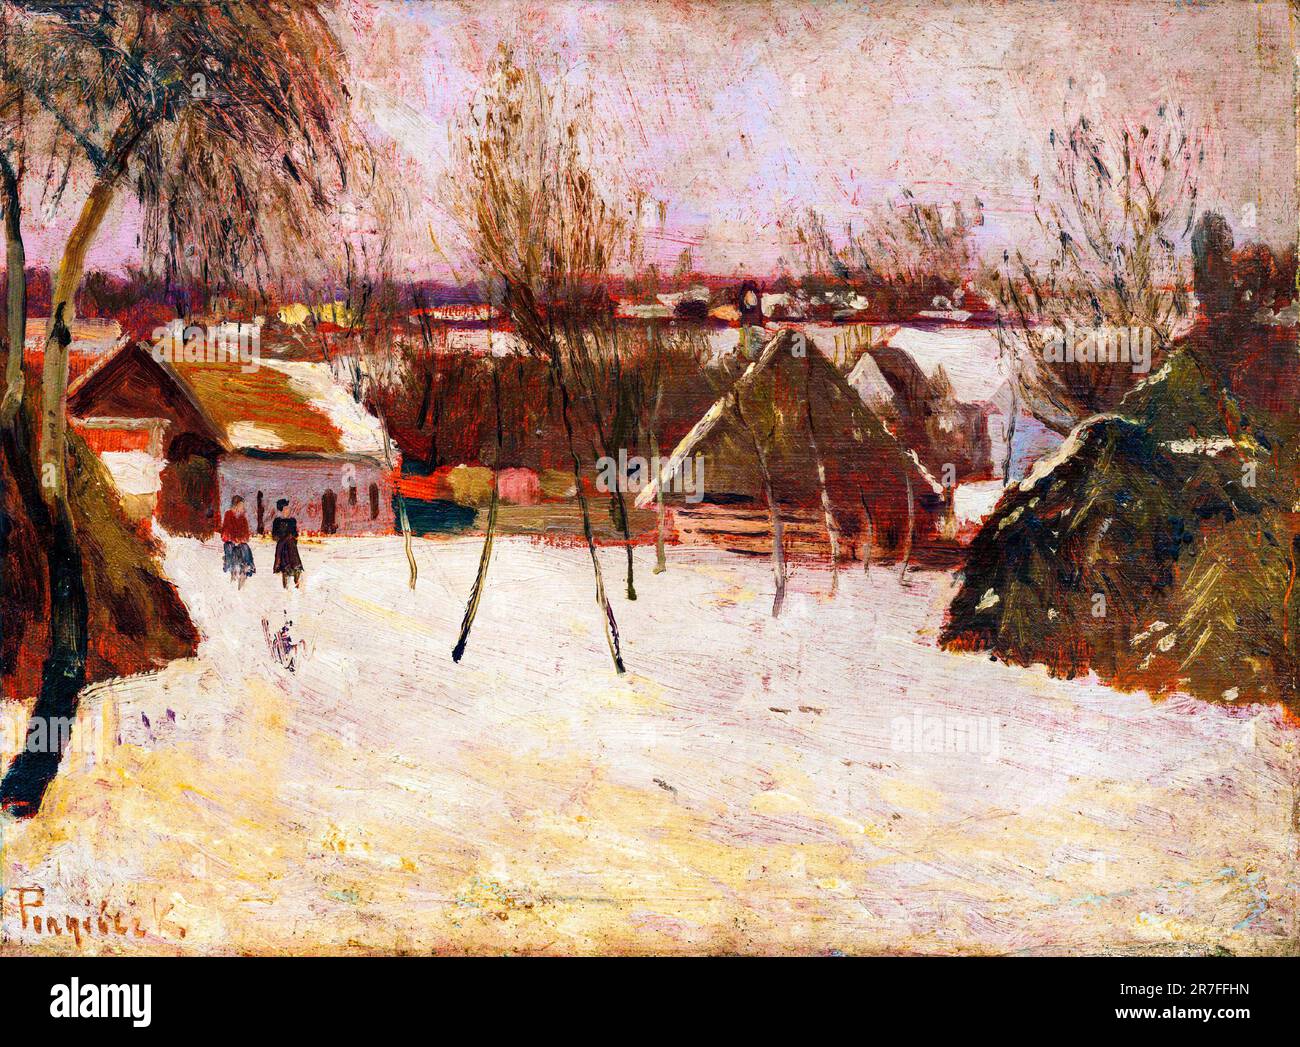 Village in winter, Karol Pongracz Stock Photo